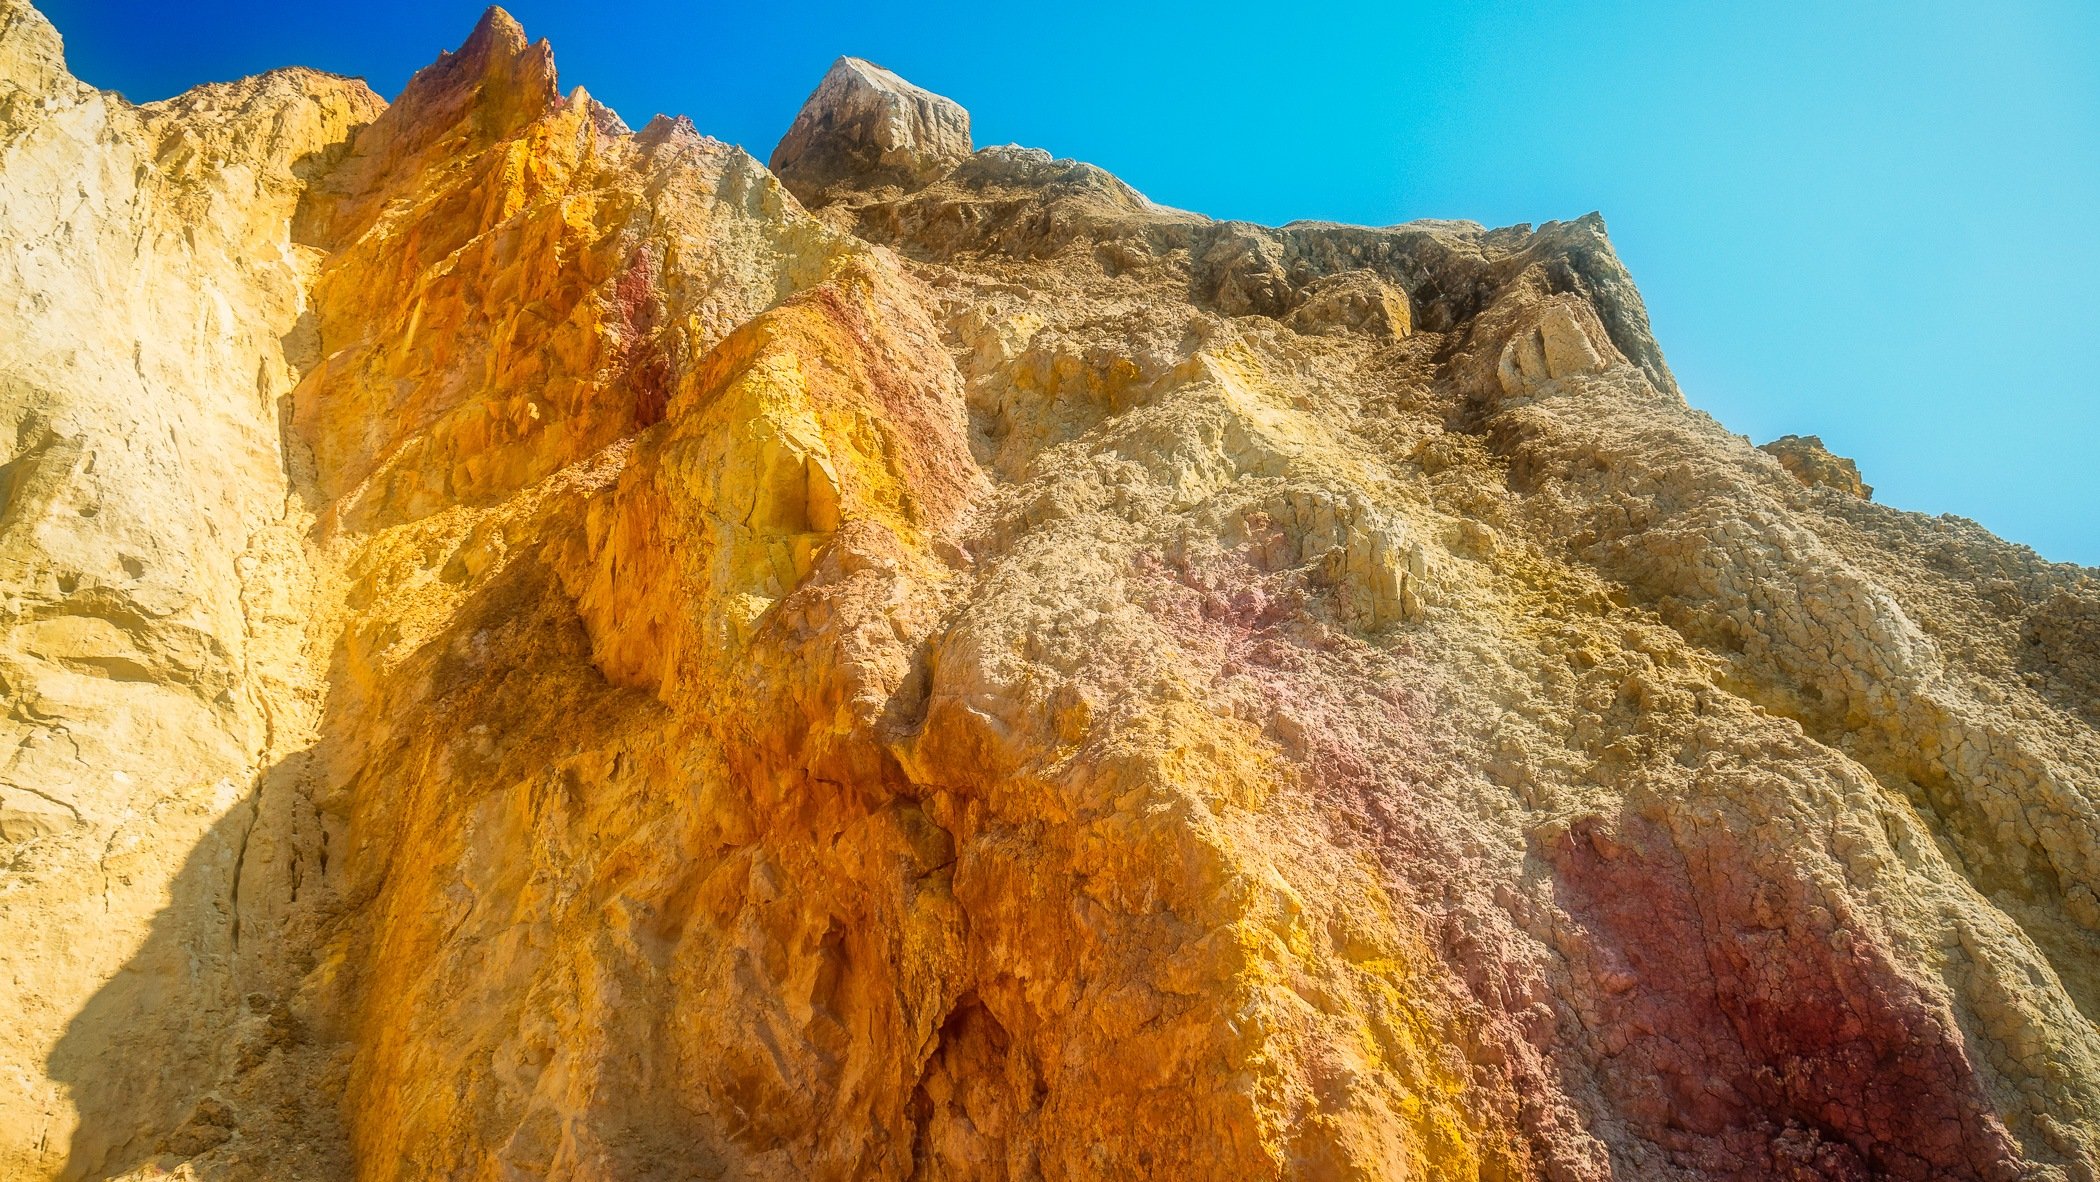 The colourful rocks of Alum Bay